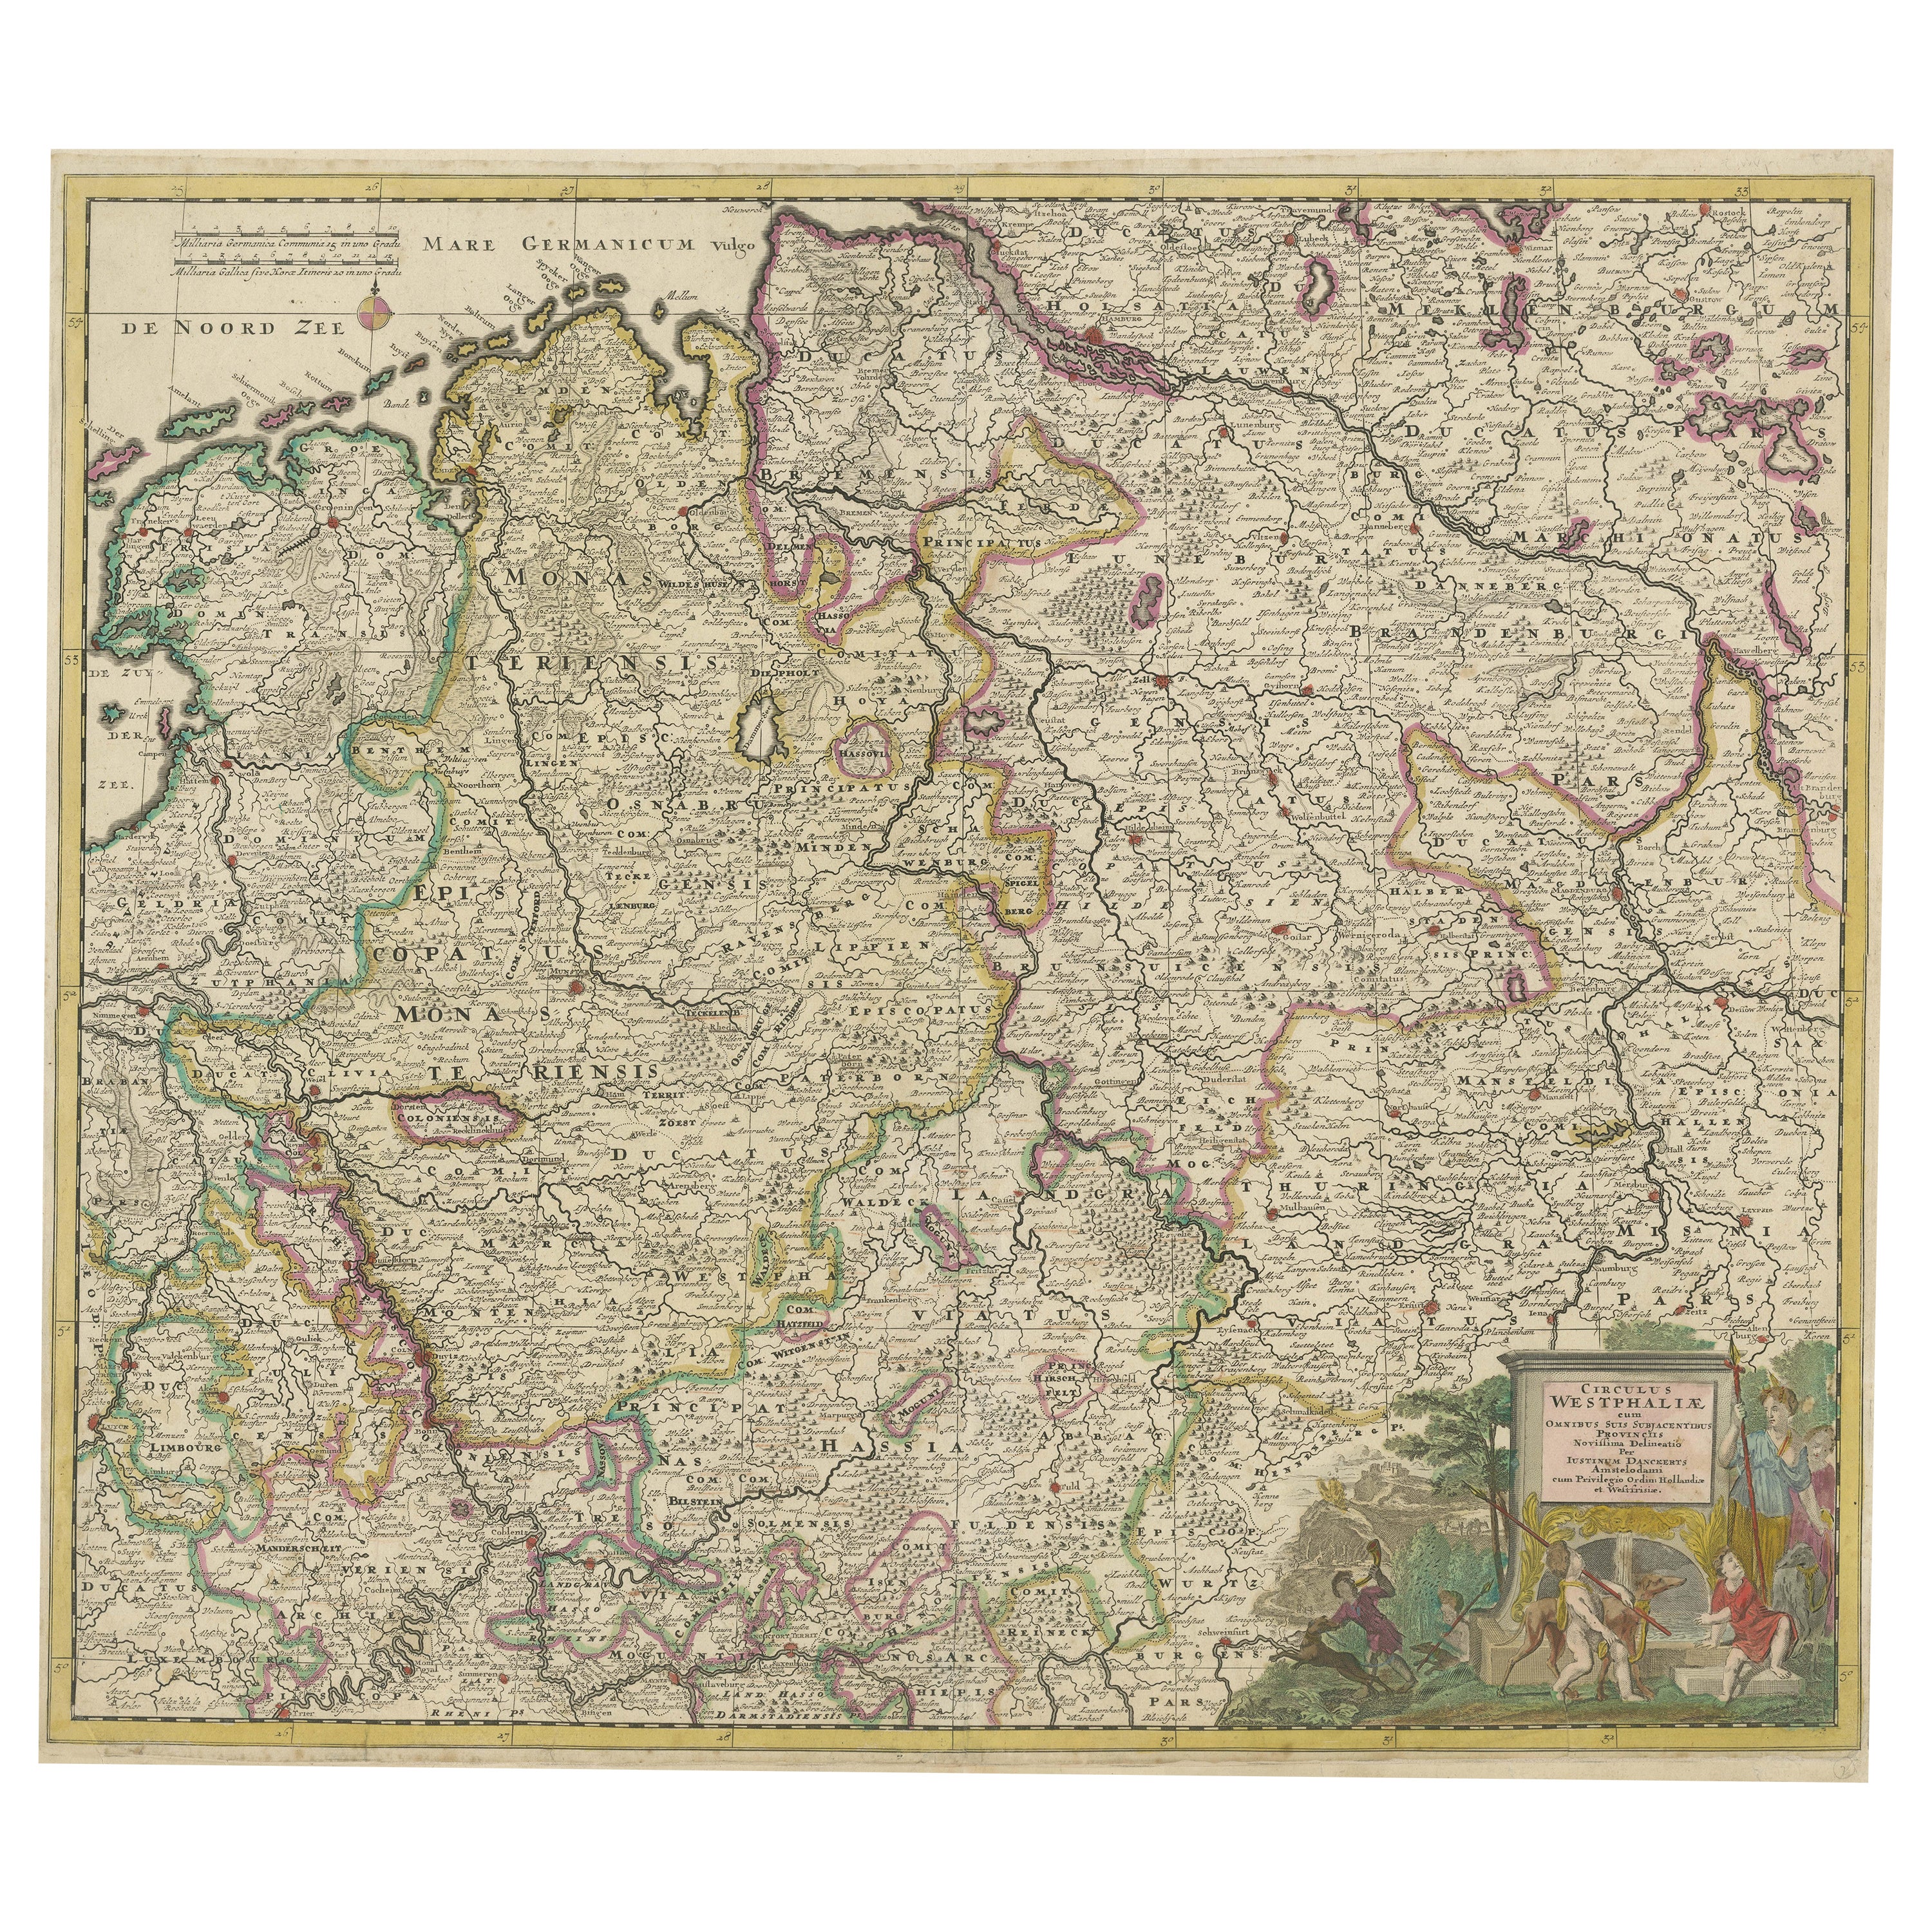 Antique Map of the Westphalia region of Germany